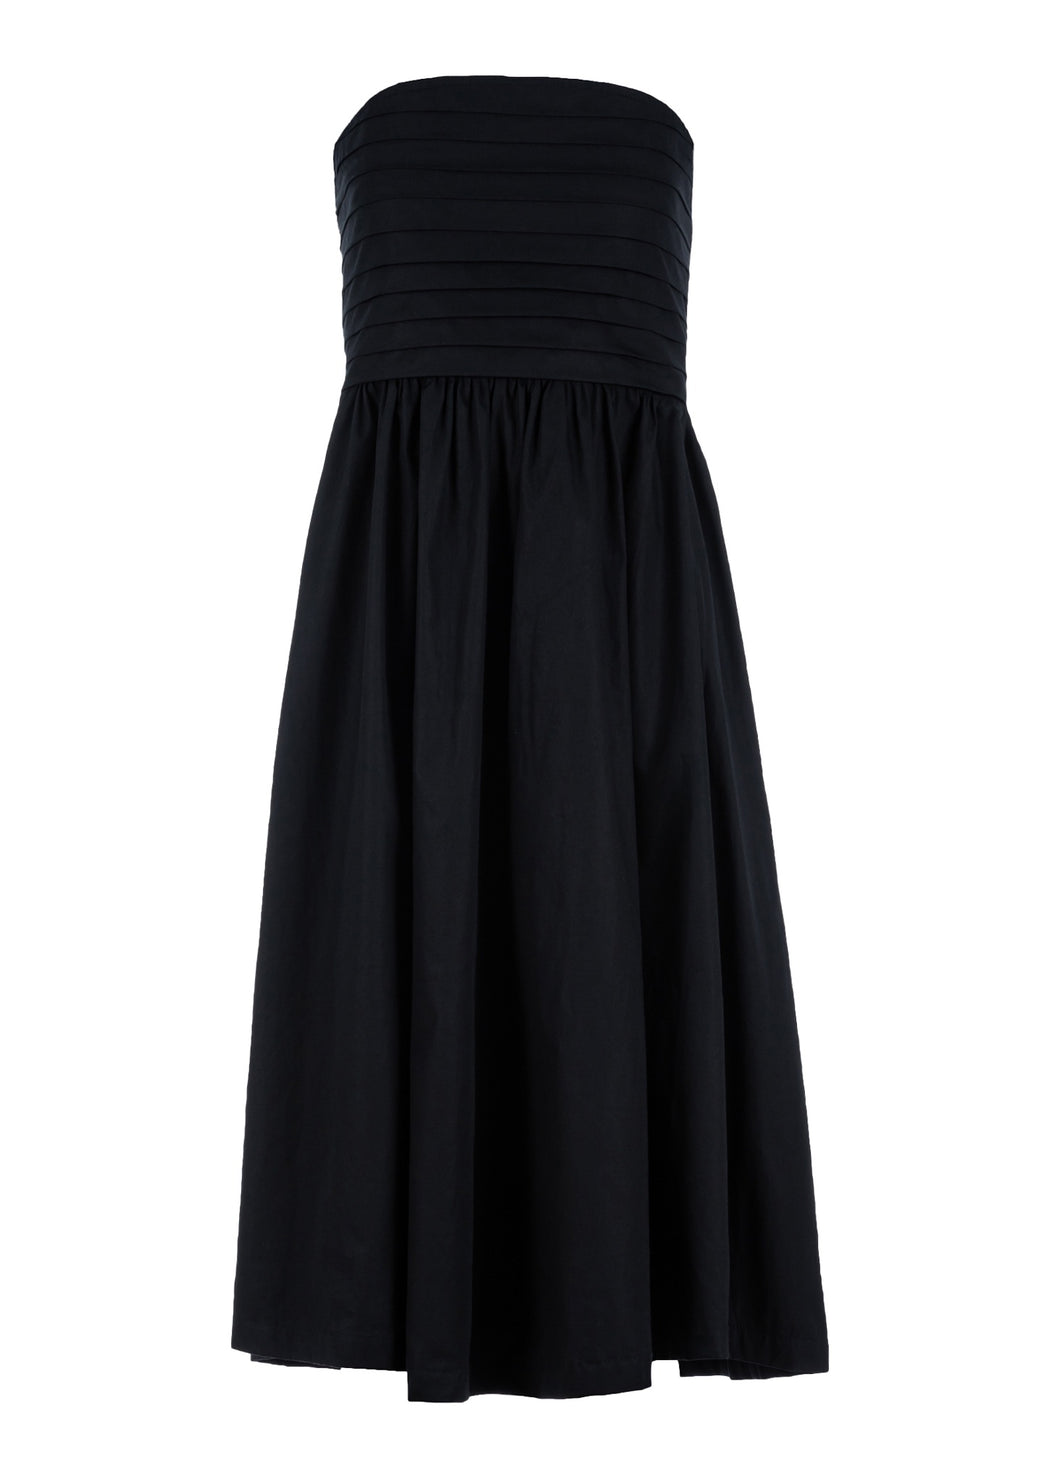 Arlo Dress in Black Poplin